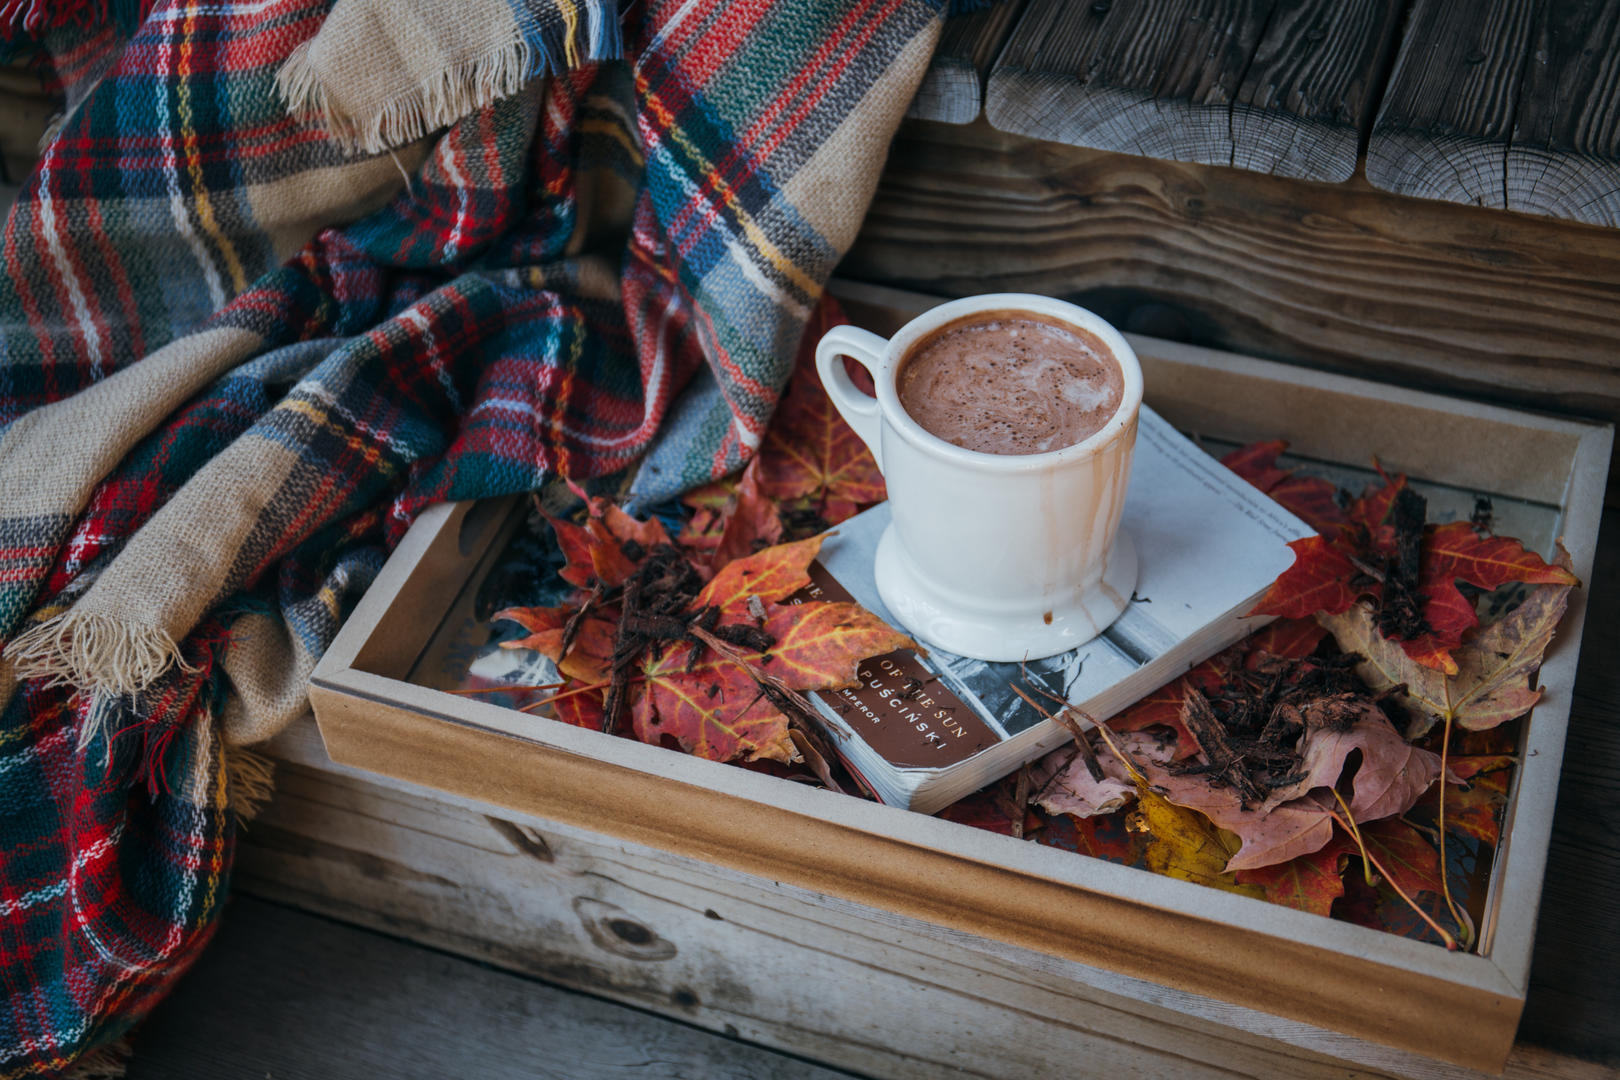 Winter scene with hot chocolate